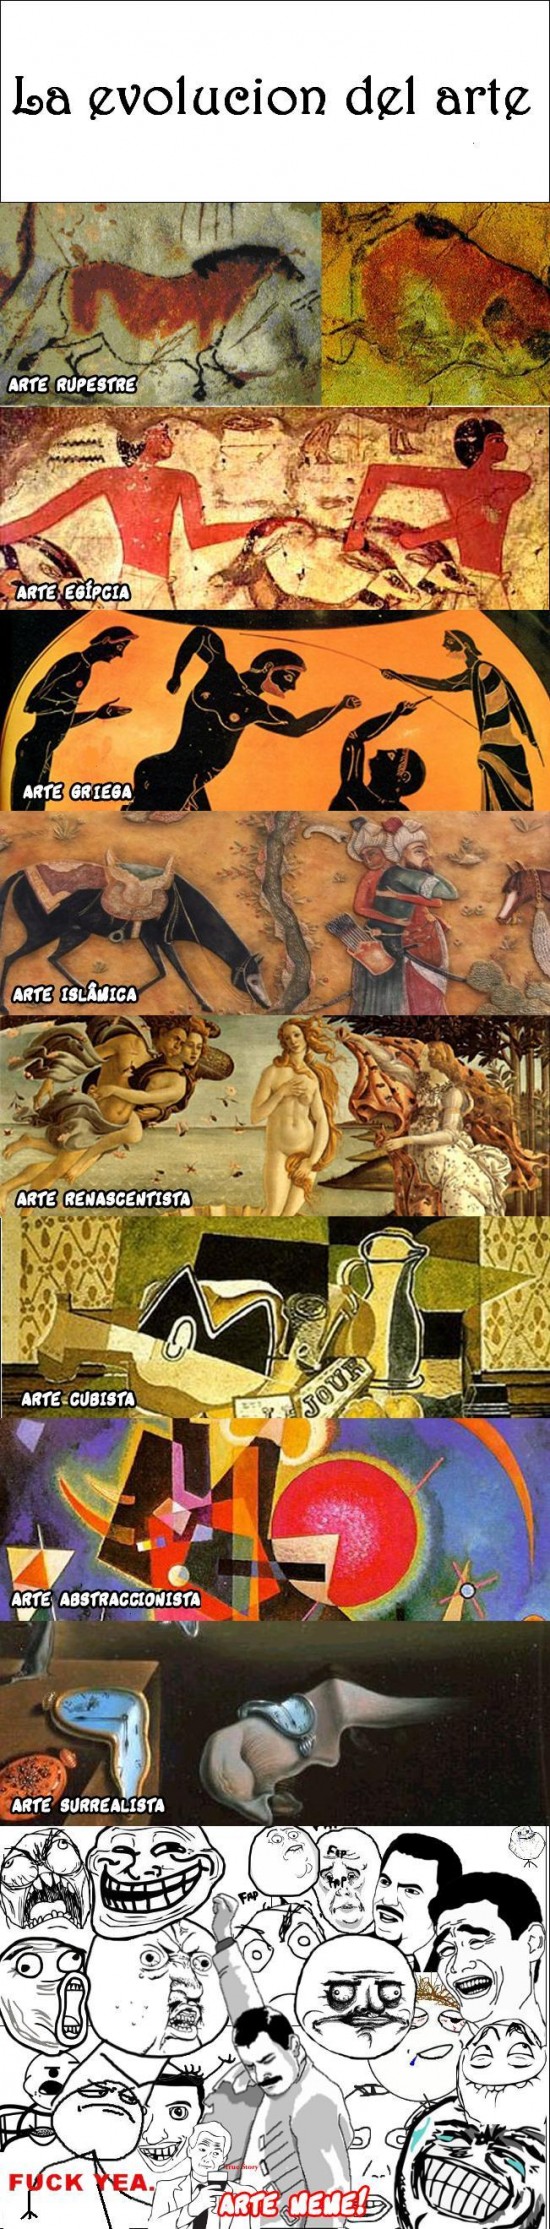 arte surrealista,cubista,egipcia,Evolución del arte,griega,islámica,memes,rupestre renacentista